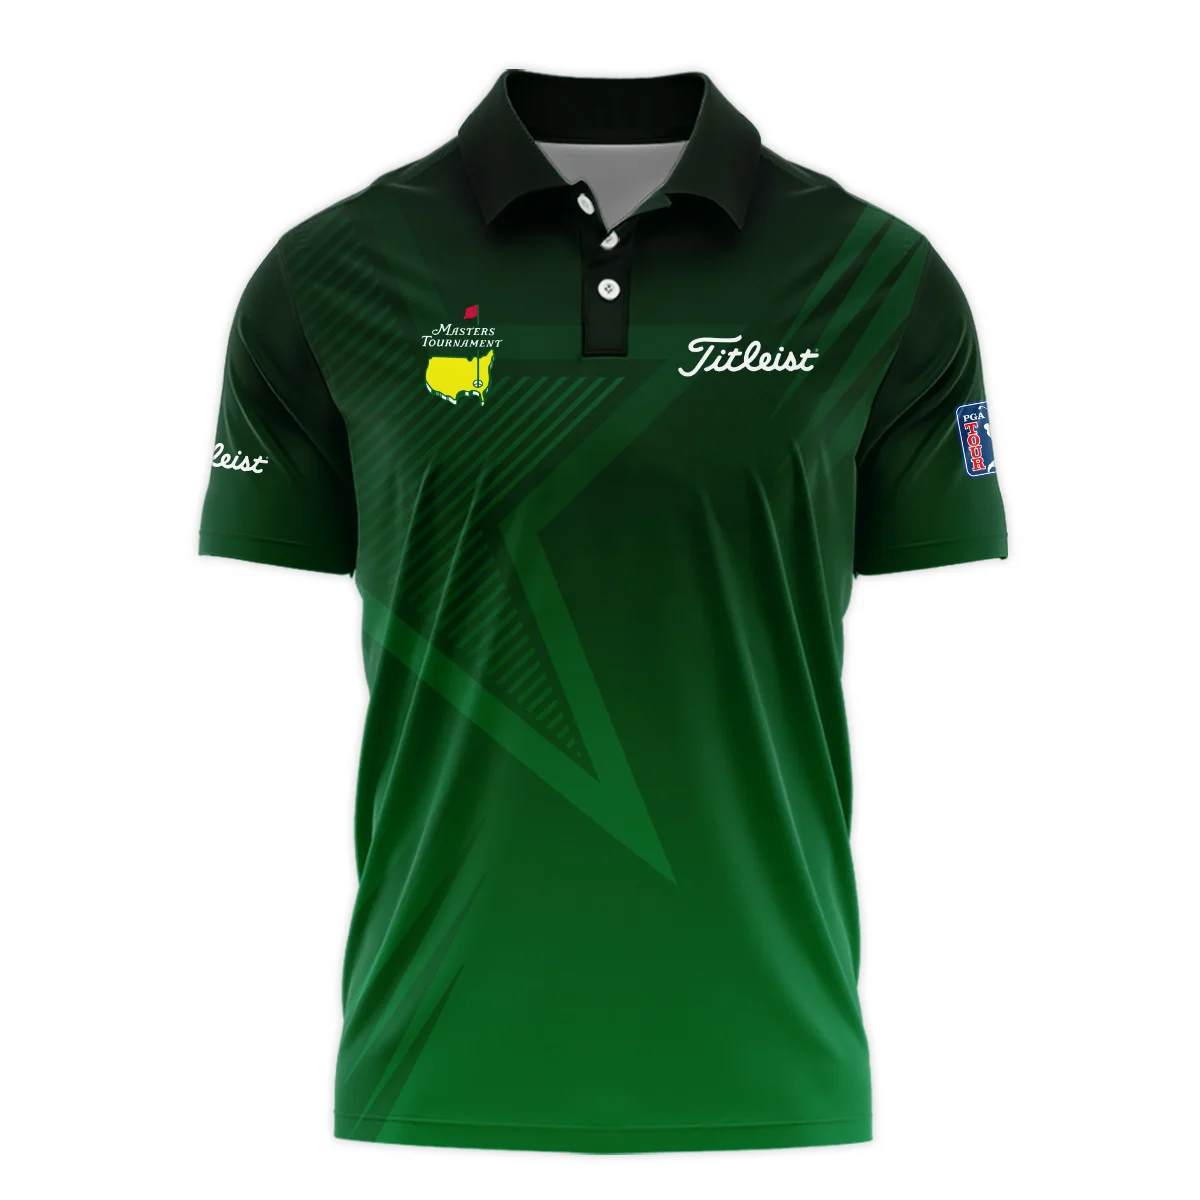 Titleist Masters Tournament Polo Shirt Dark Green Gradient Star Pattern Golf Sports Polo Shirt For Men